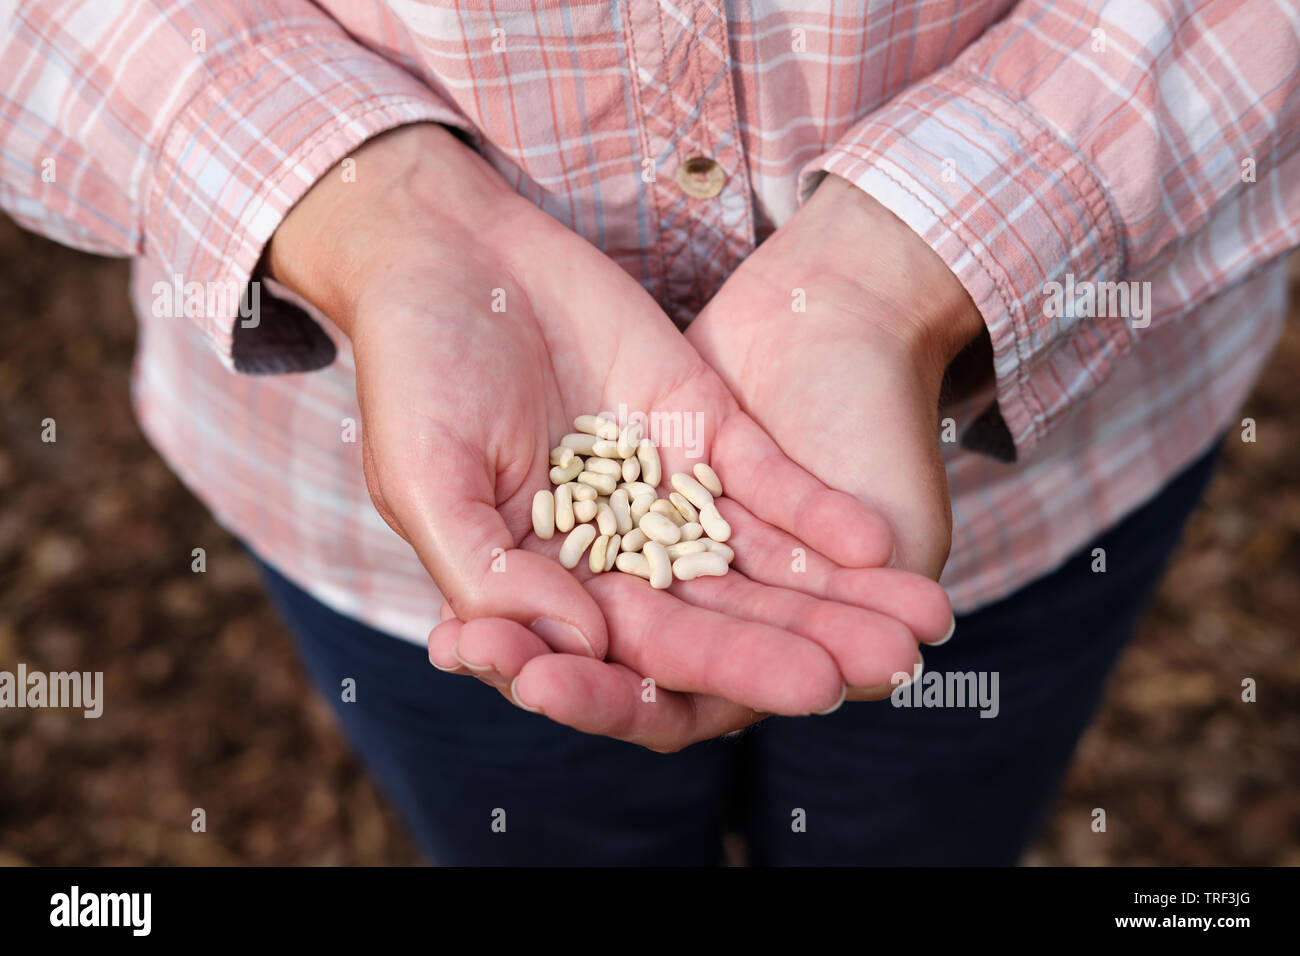 Caucasian woman holding Dwarf Bean 'Ferrari' plant seeds in open hands. Stock Photo